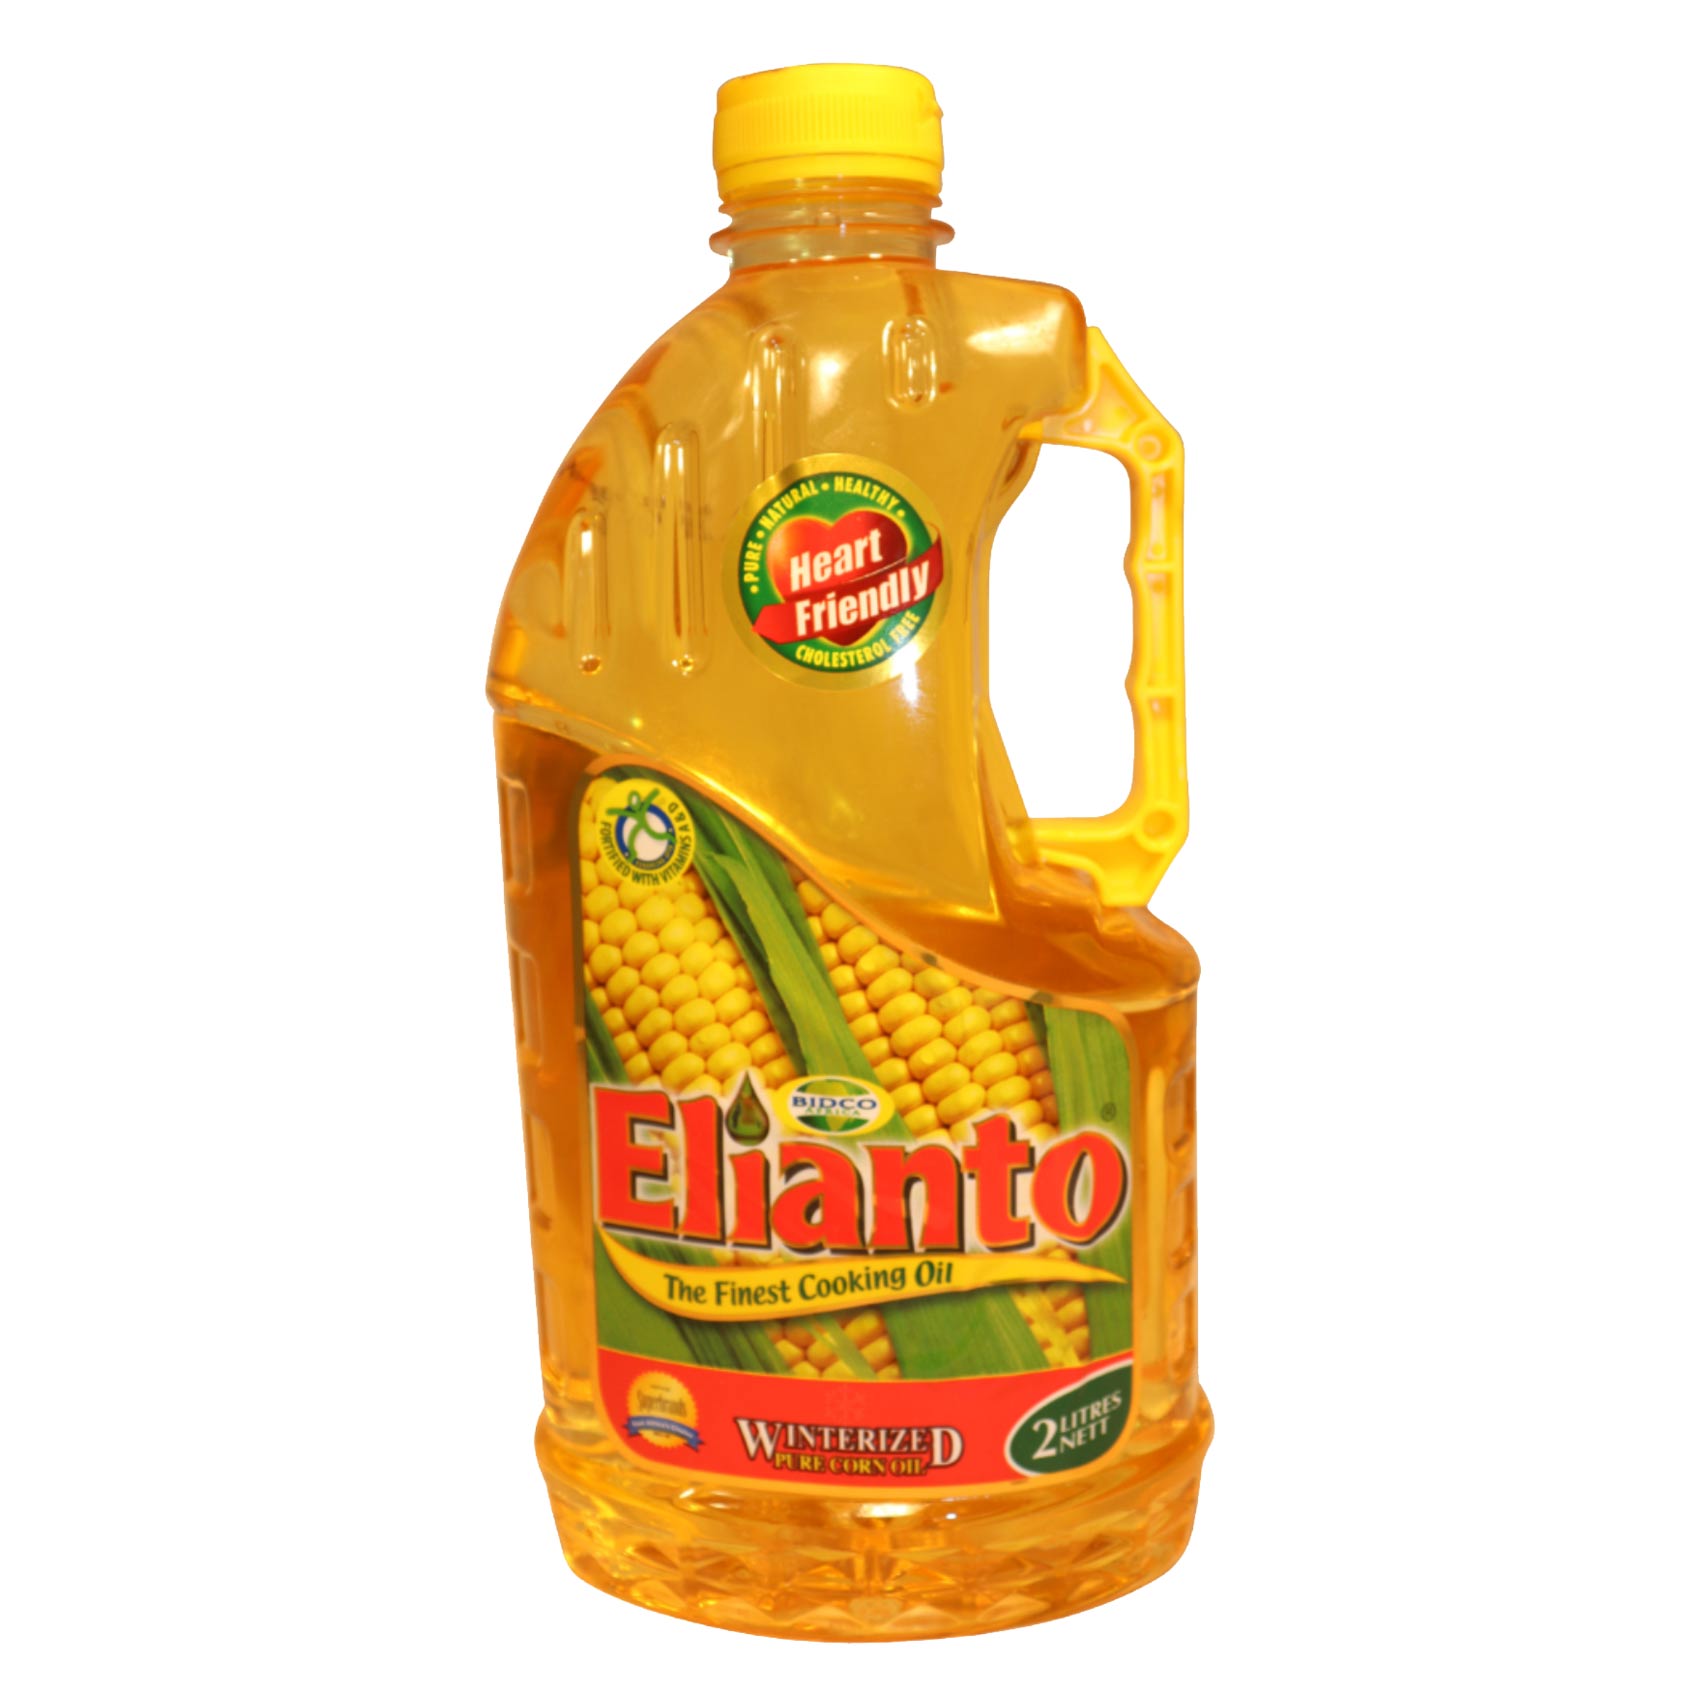 Elianto Winterized Pure Corn Cooking Oil 2L